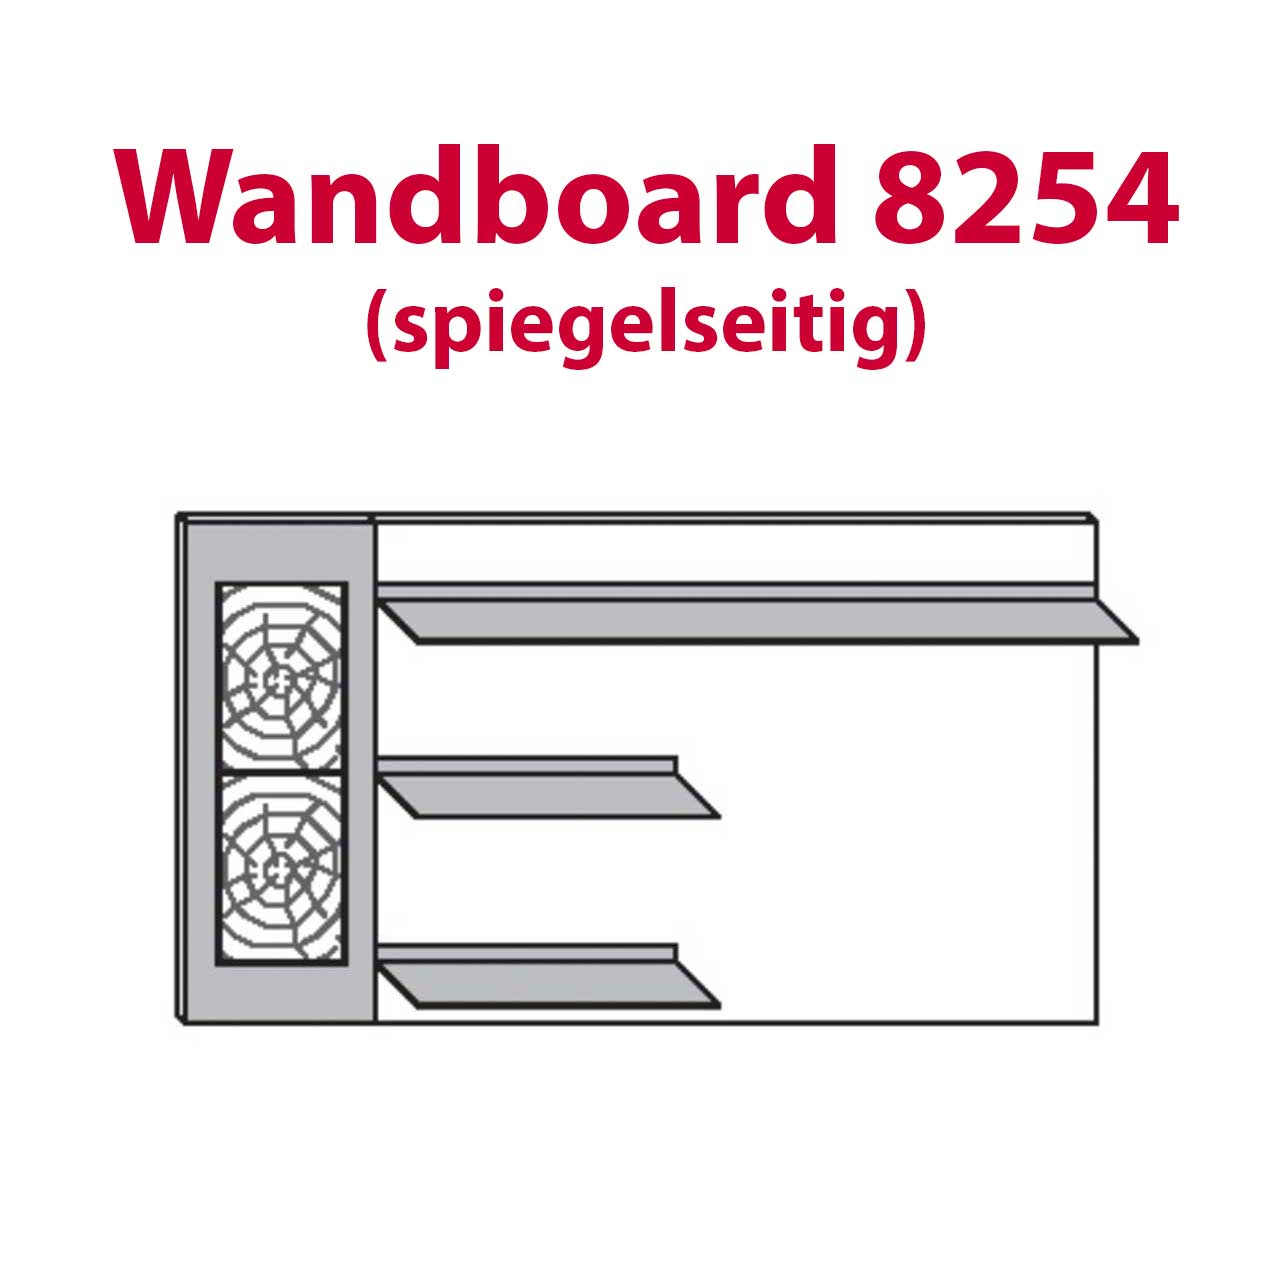 Wöstmann WM 1910 - Wandboard 8253 & 8254